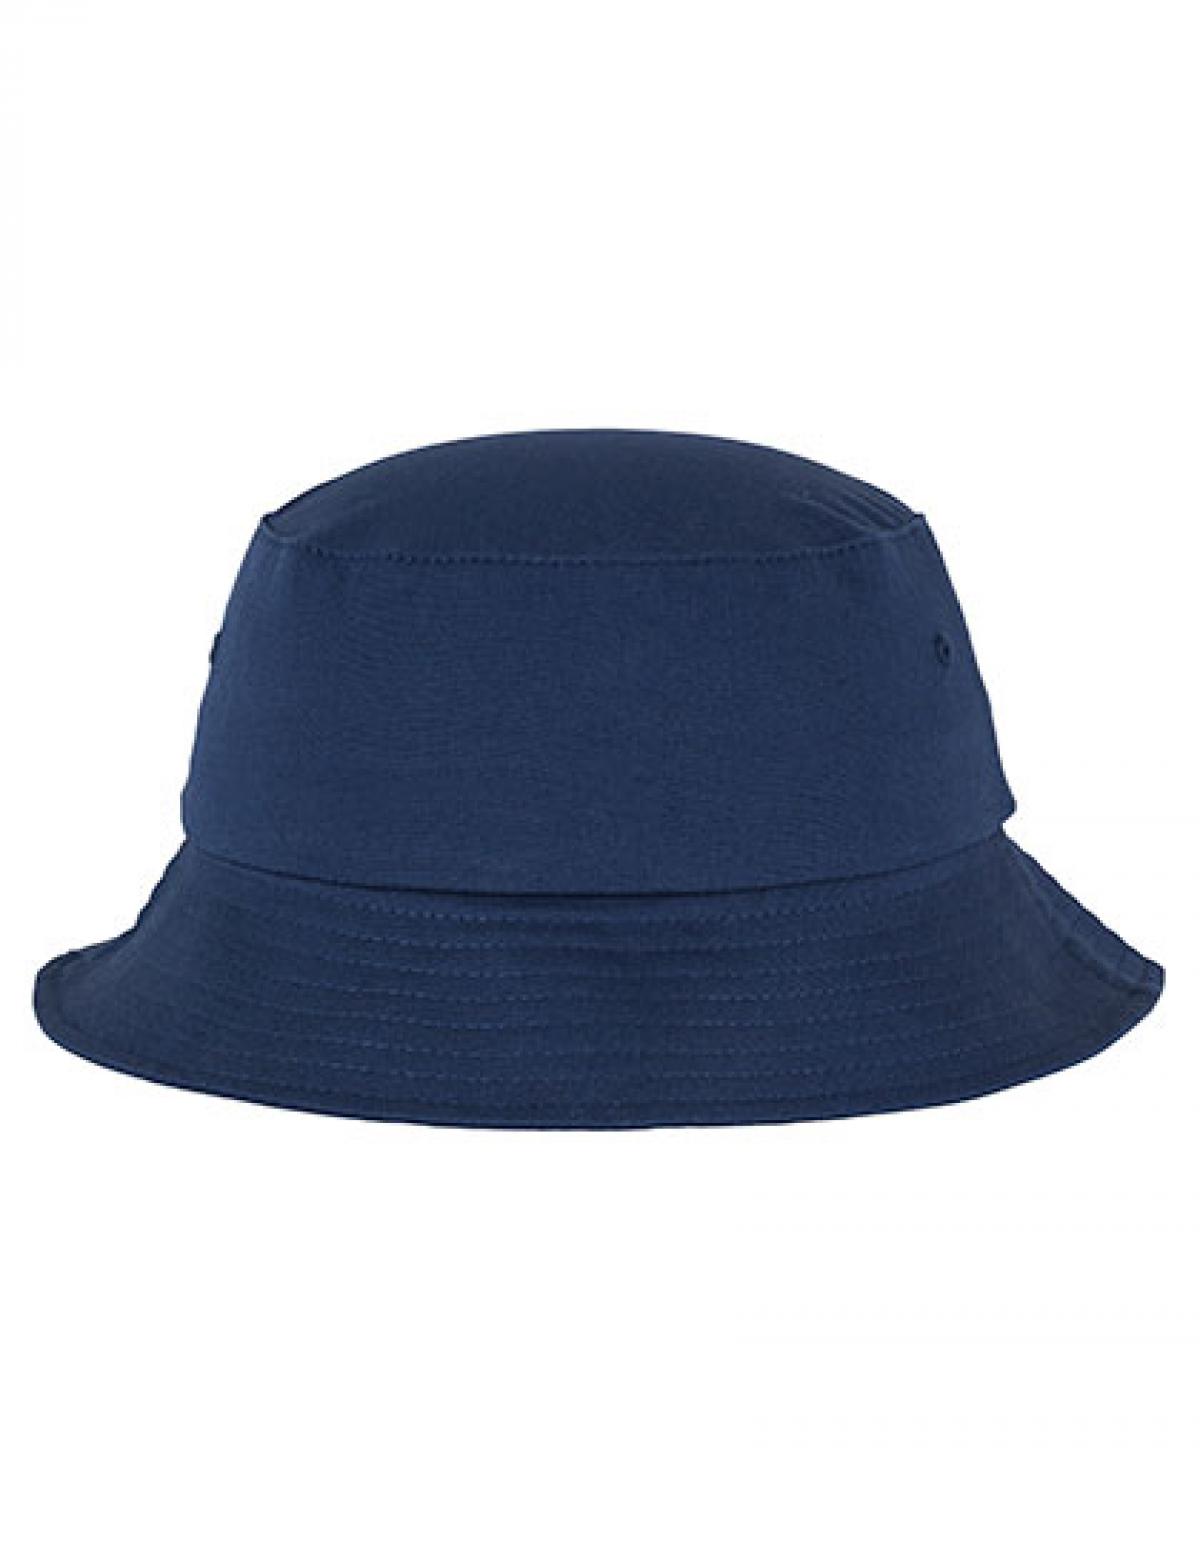 Cotton Twill Bucket Hat / Kappe / Mütze / Hut | FLEXFIT | eBay